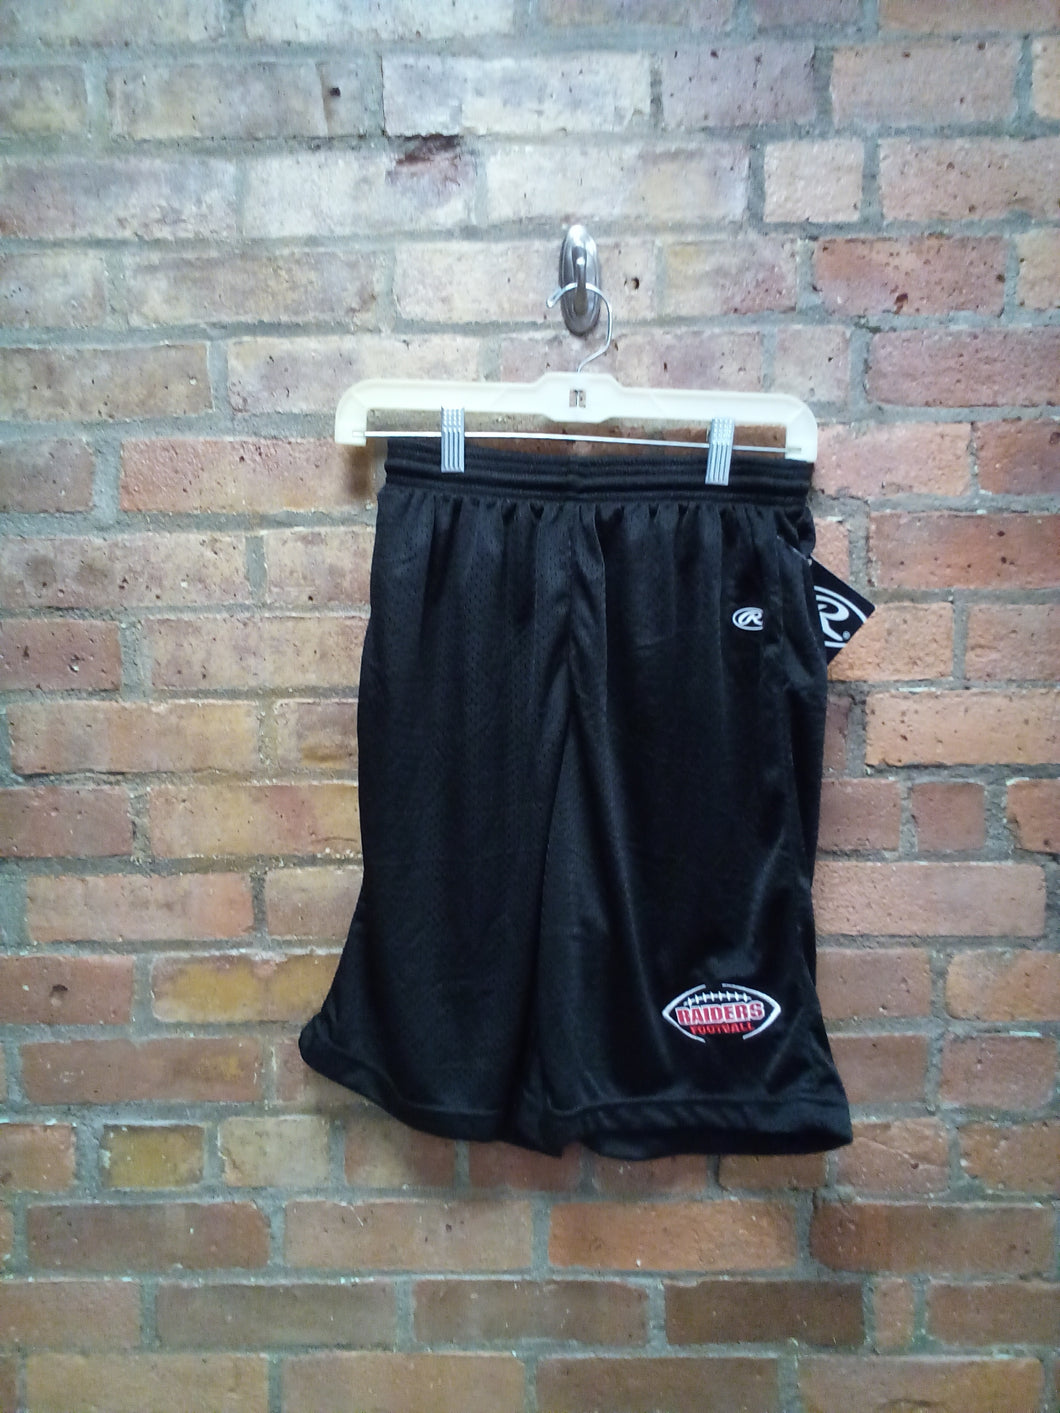 CLEARANCE - Mechanicville Raiders Football Gym Shorts - Size Medium